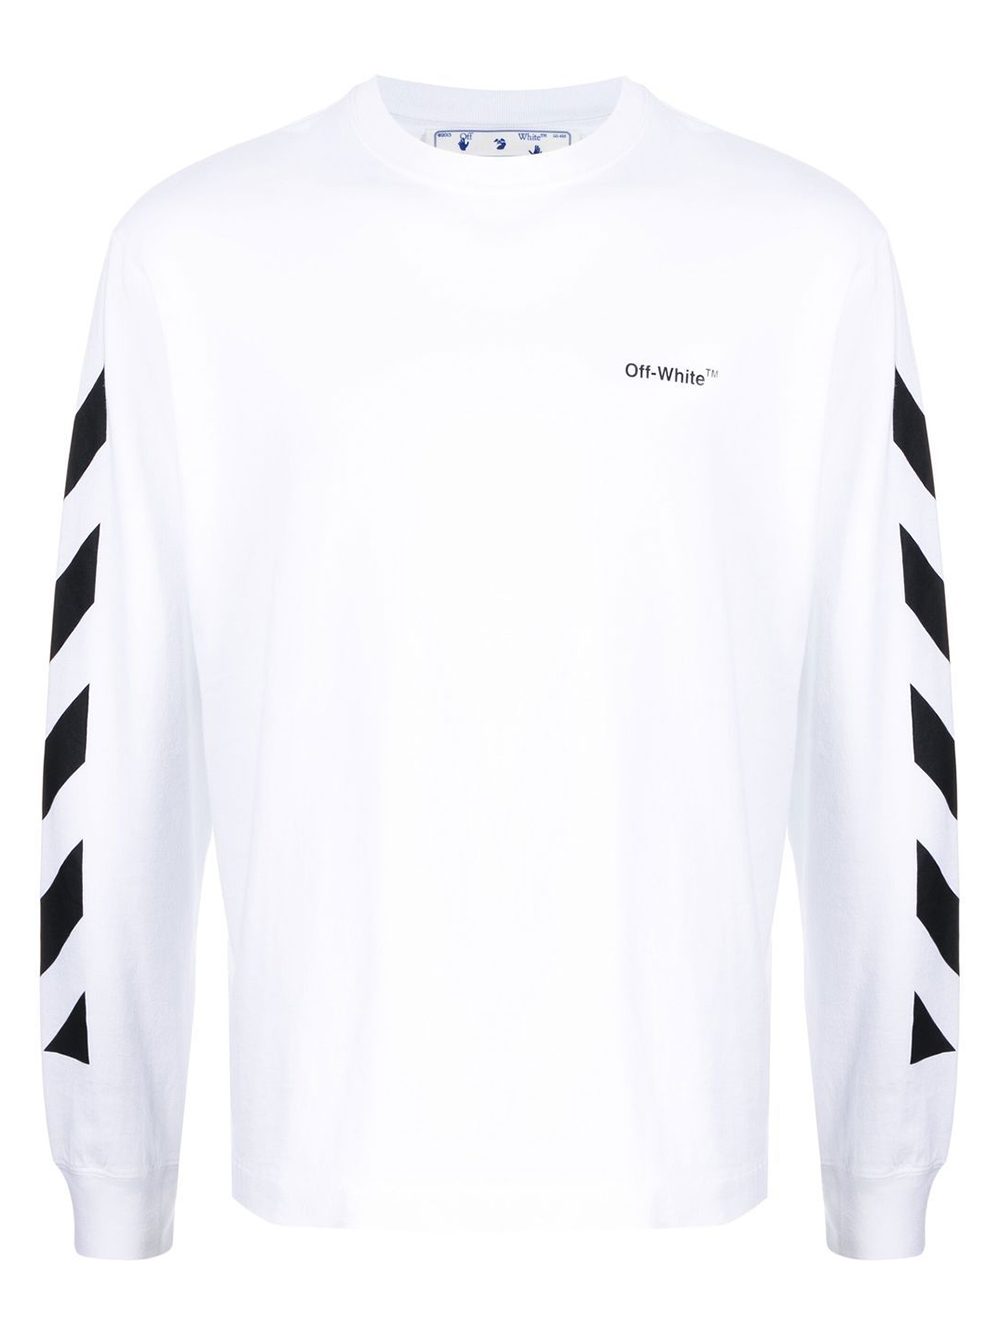 off-white オフホワイト ロングtシャツ - Tシャツ